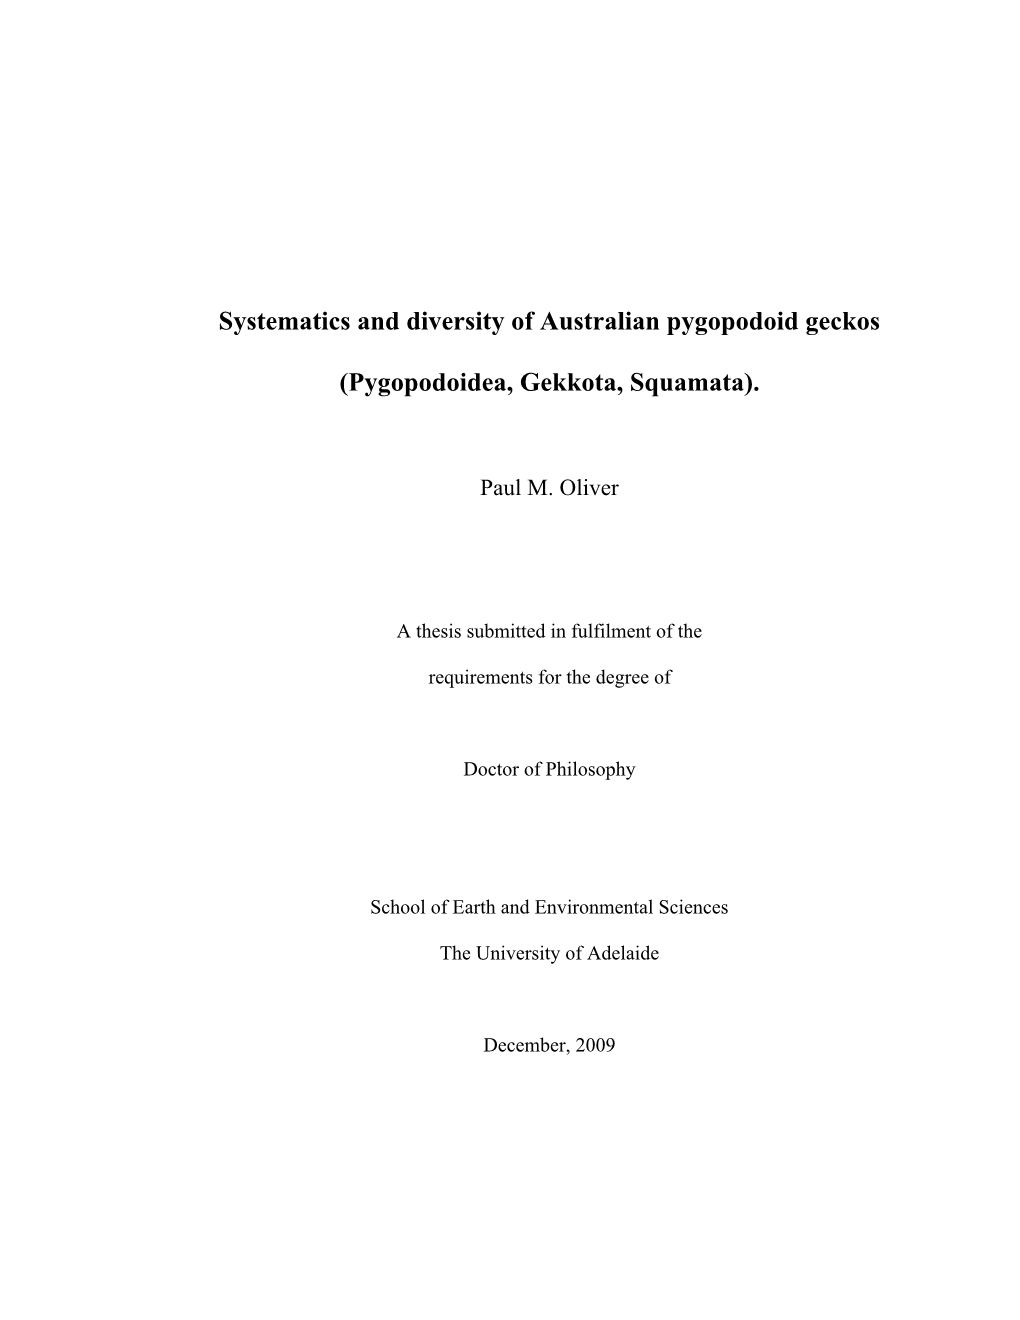 Systematics and Diversity of Australian Pygopodoid Geckos